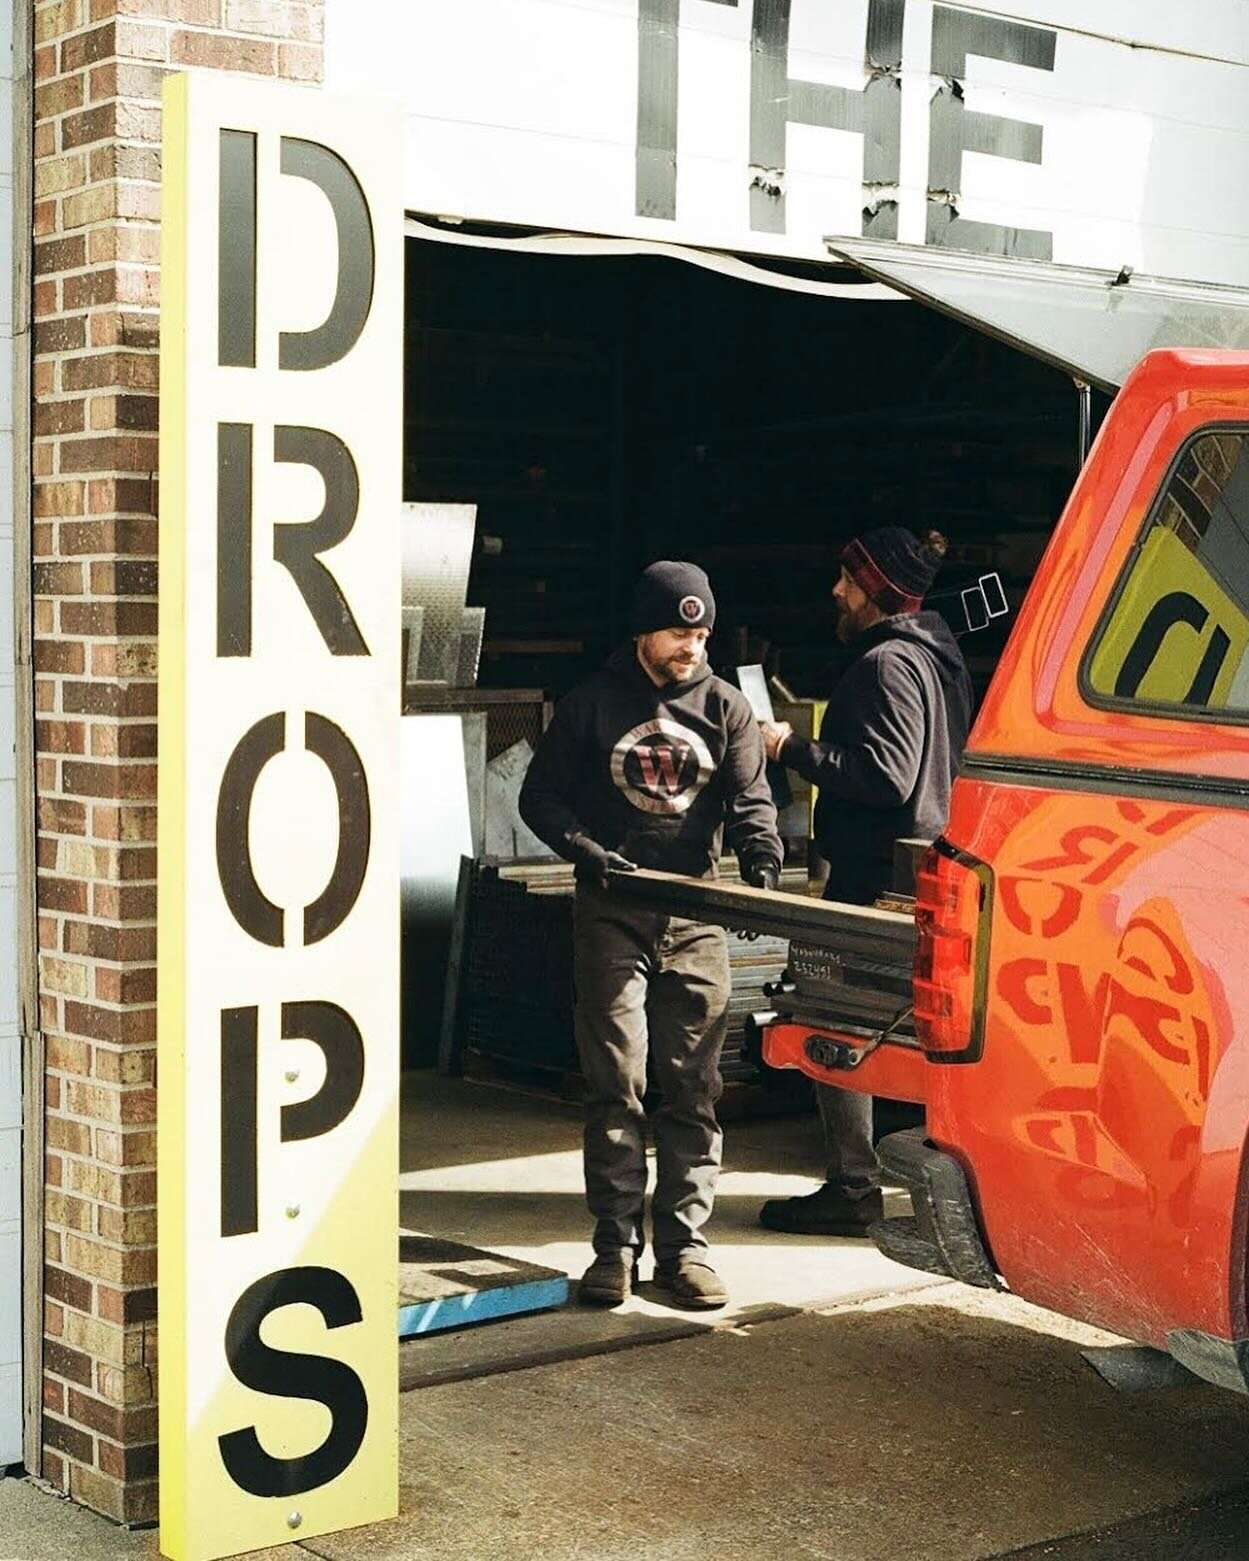 The Drop Shop: Reloaded